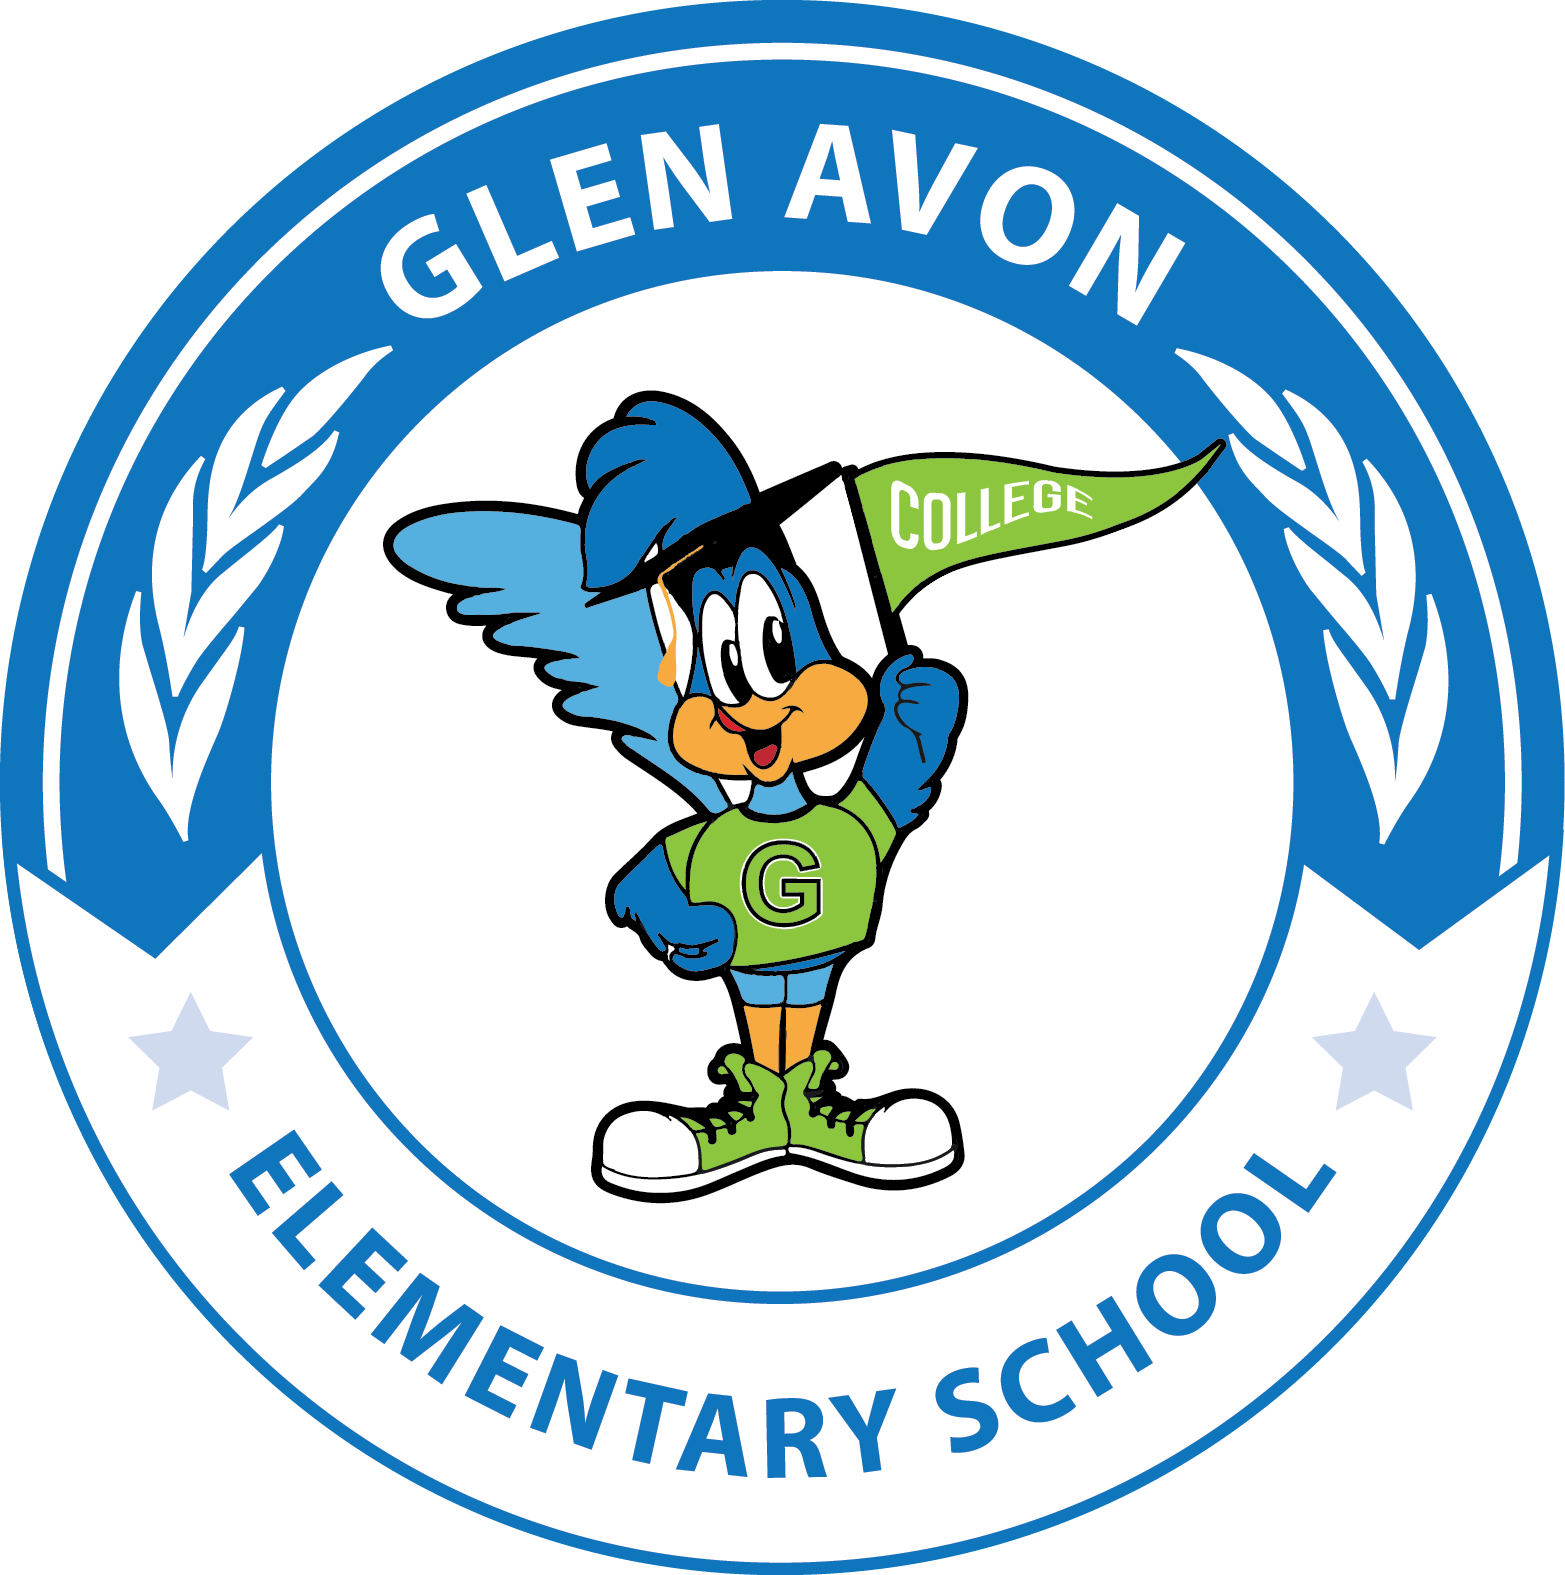 Glen Avon logo.png